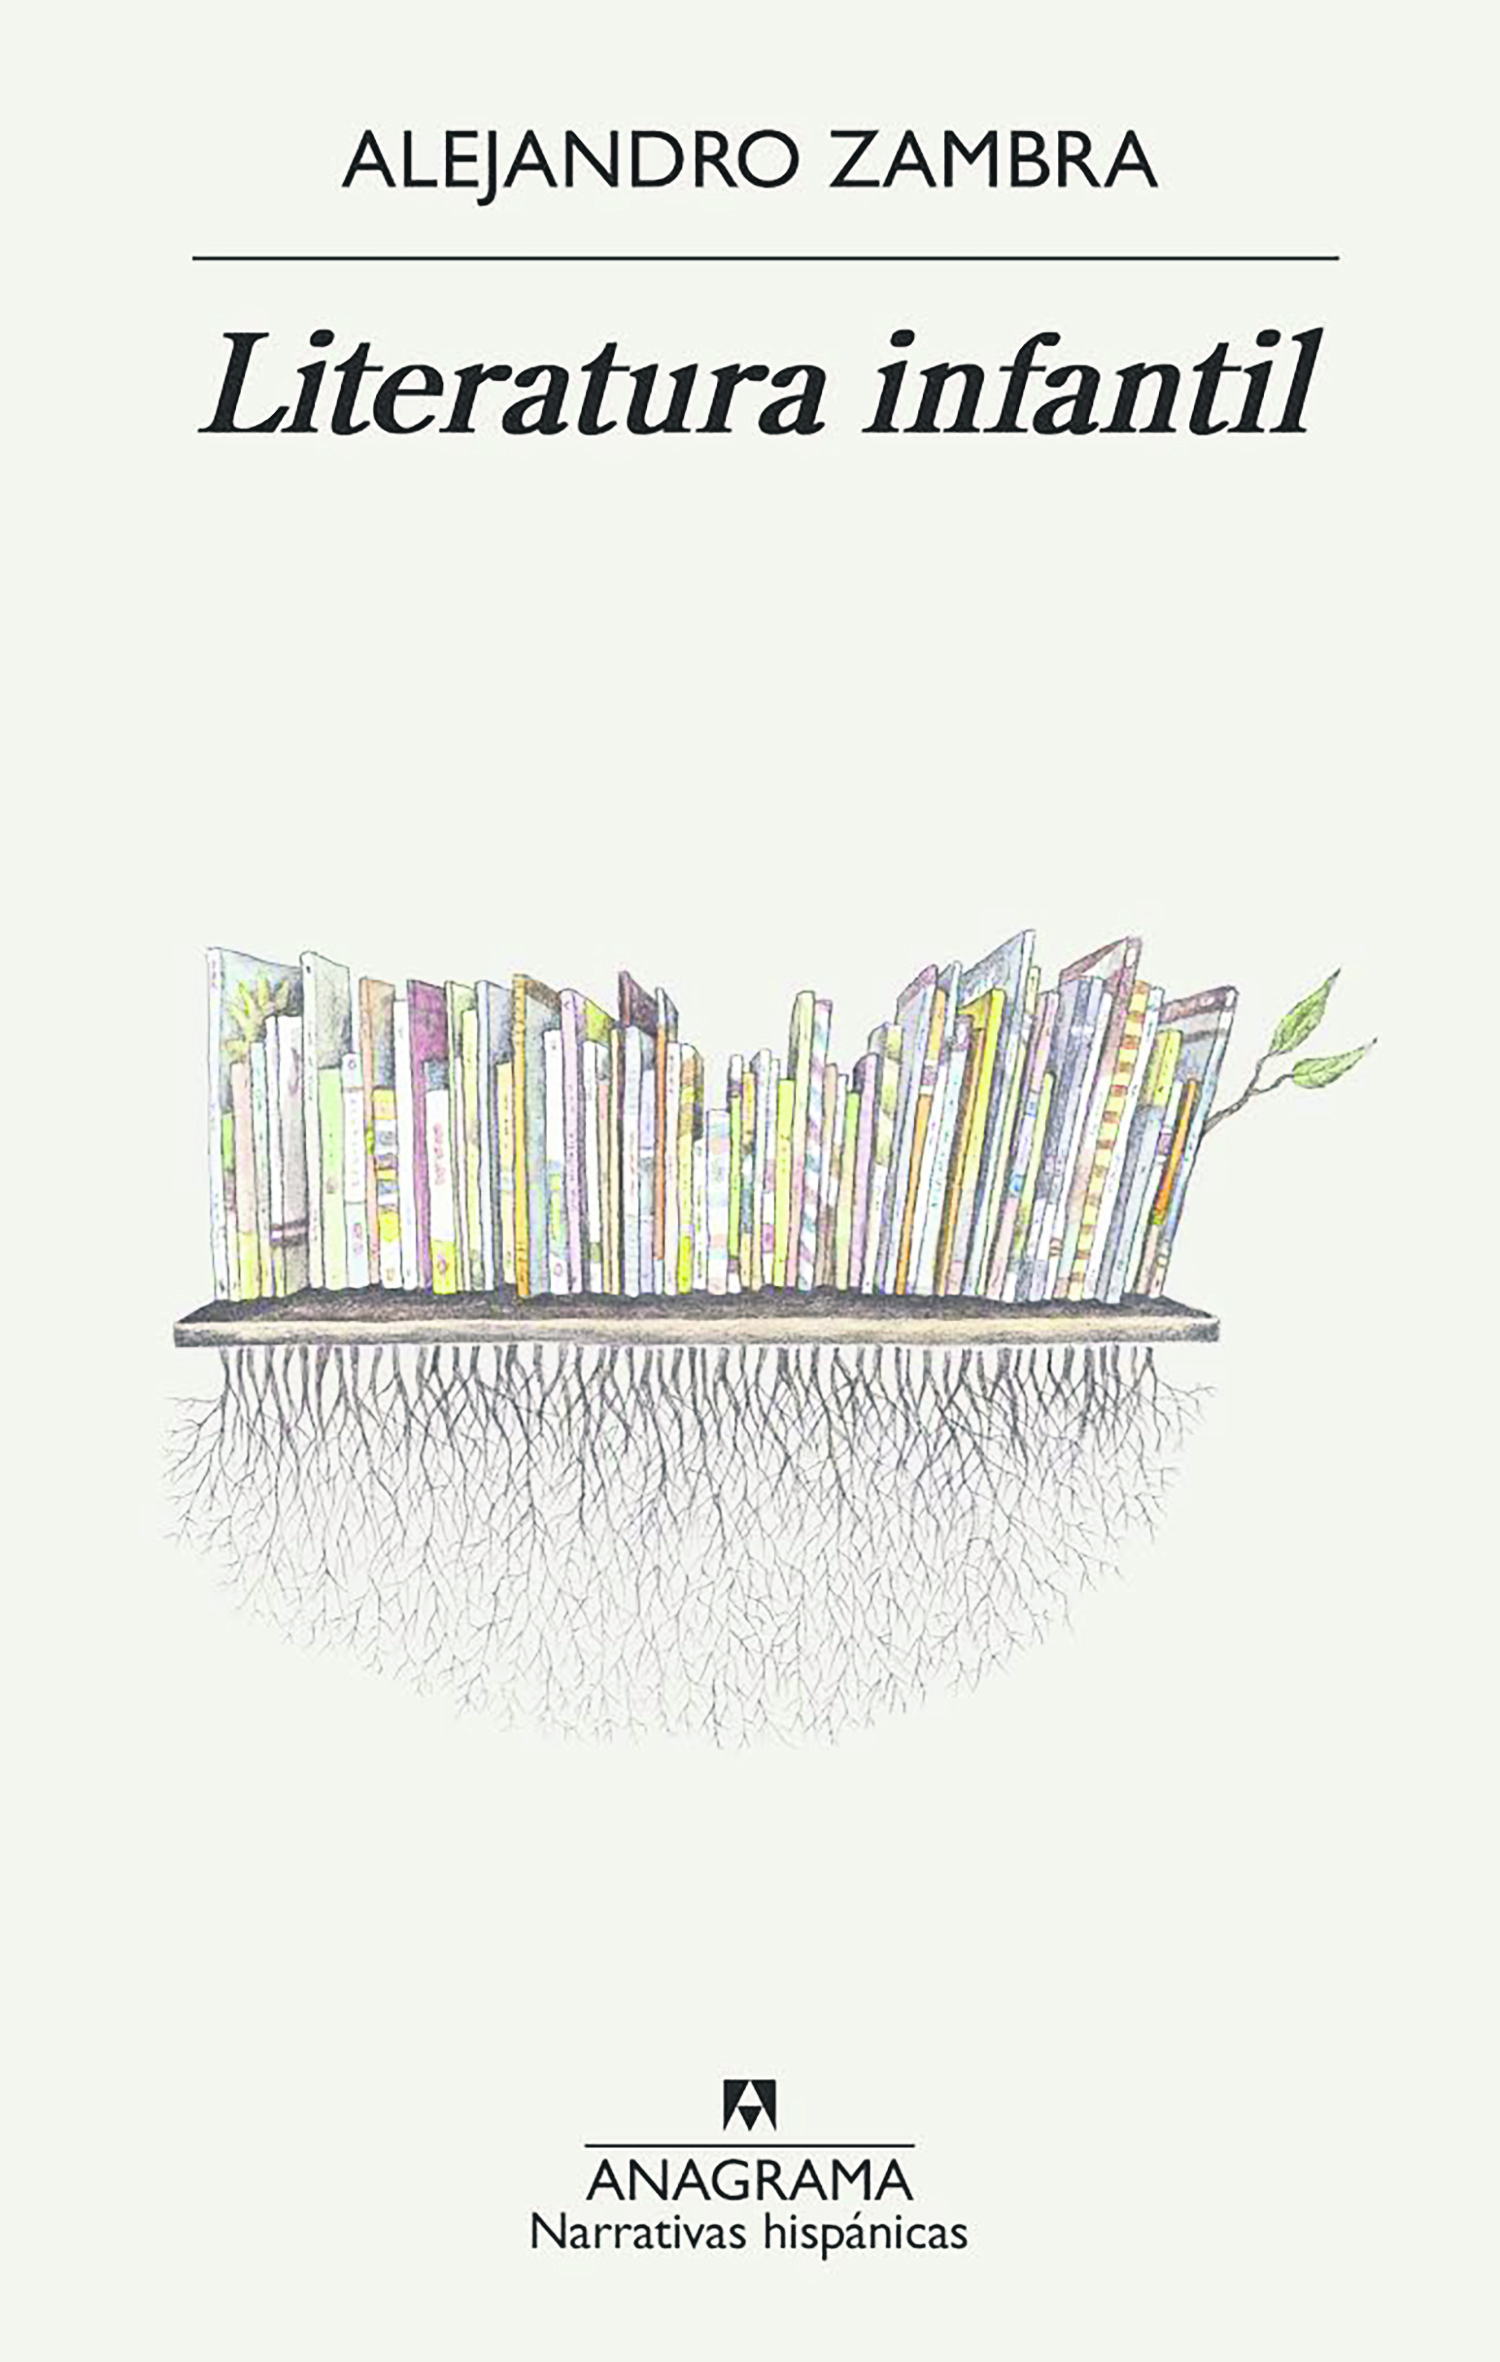 Cover photo of Literatura infantil